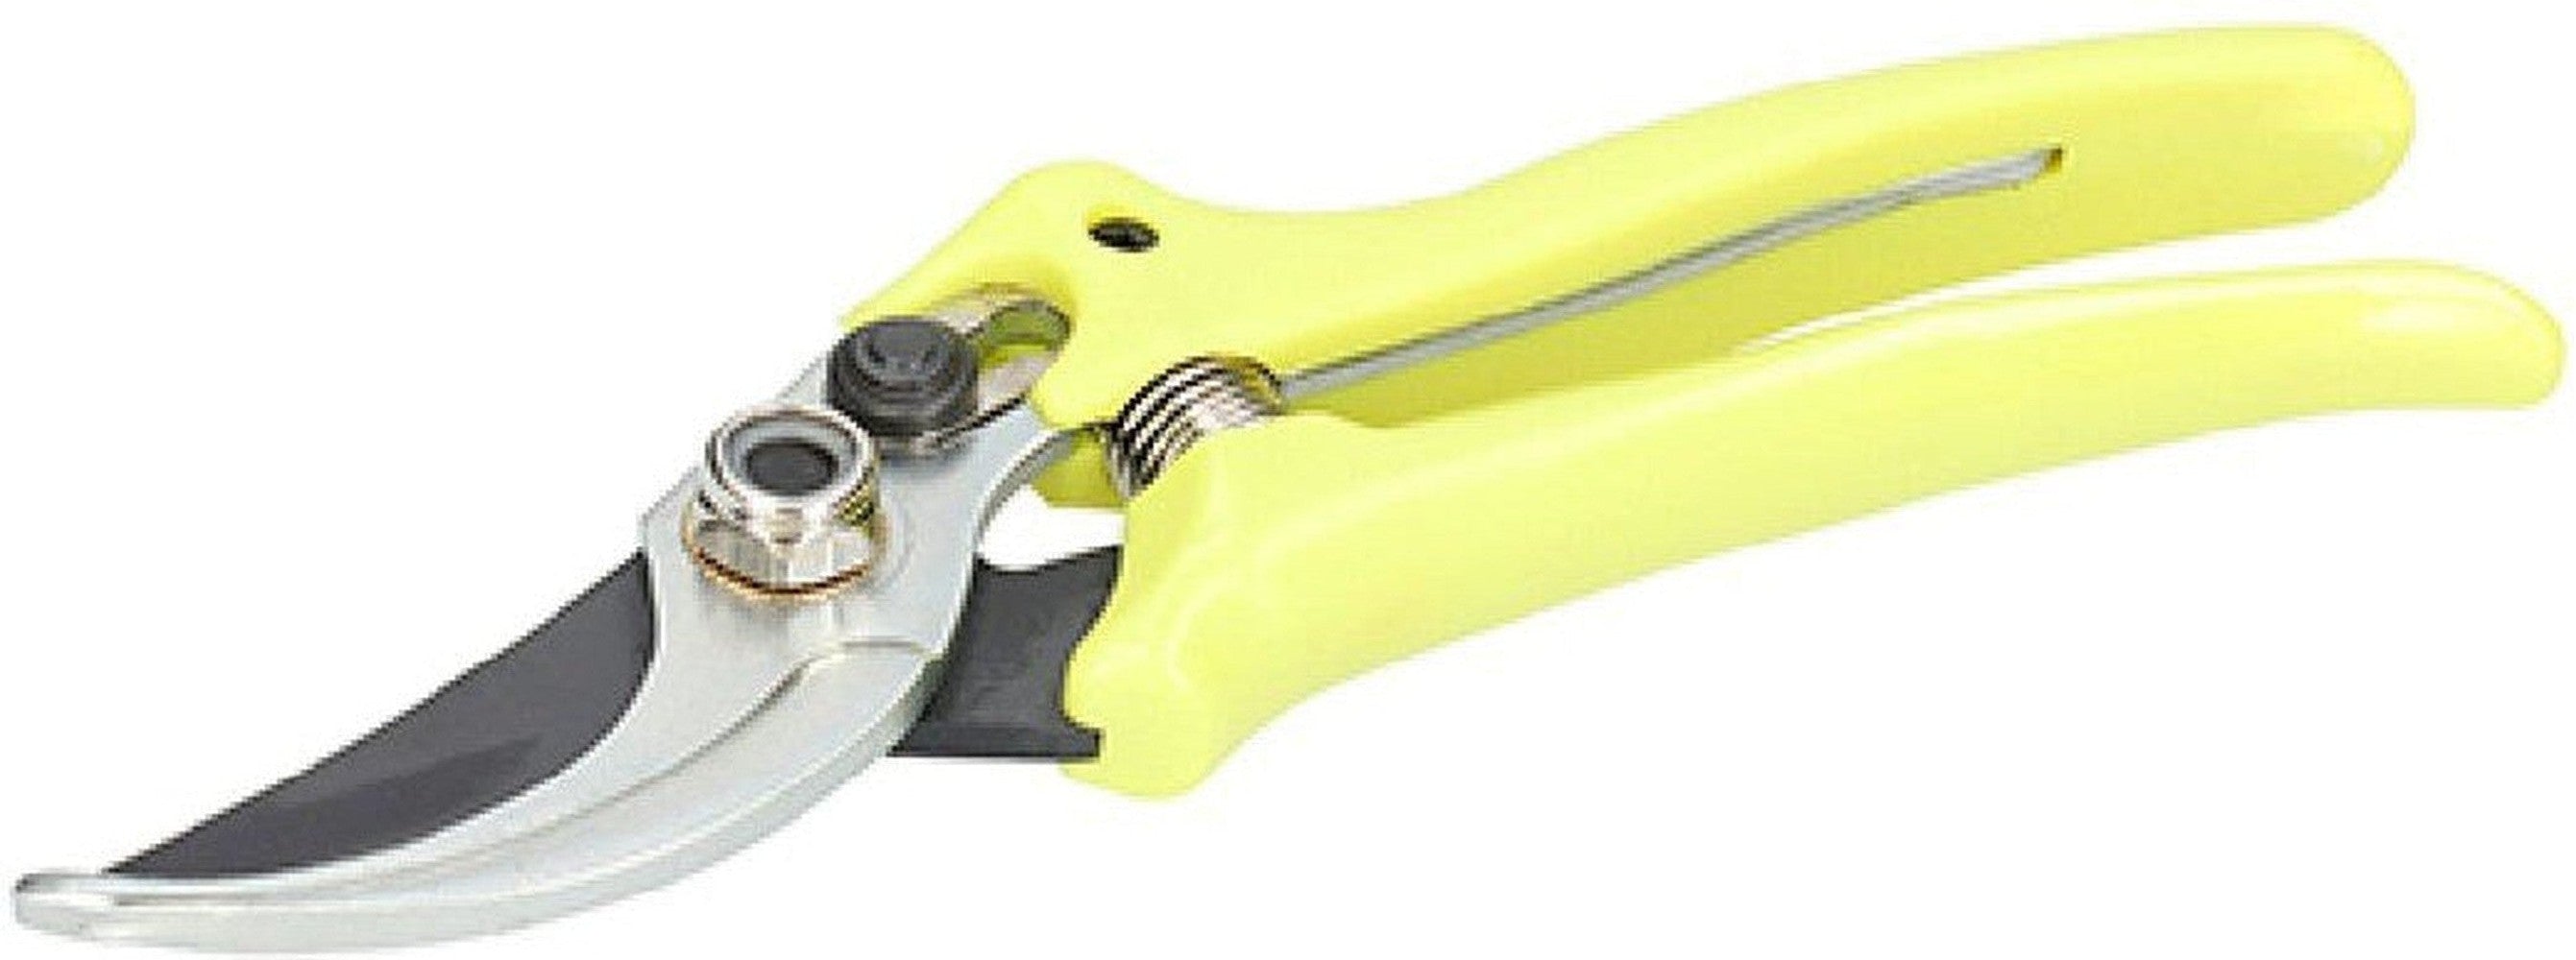 Garden Scissors Ferrestock BYPASS Yellow